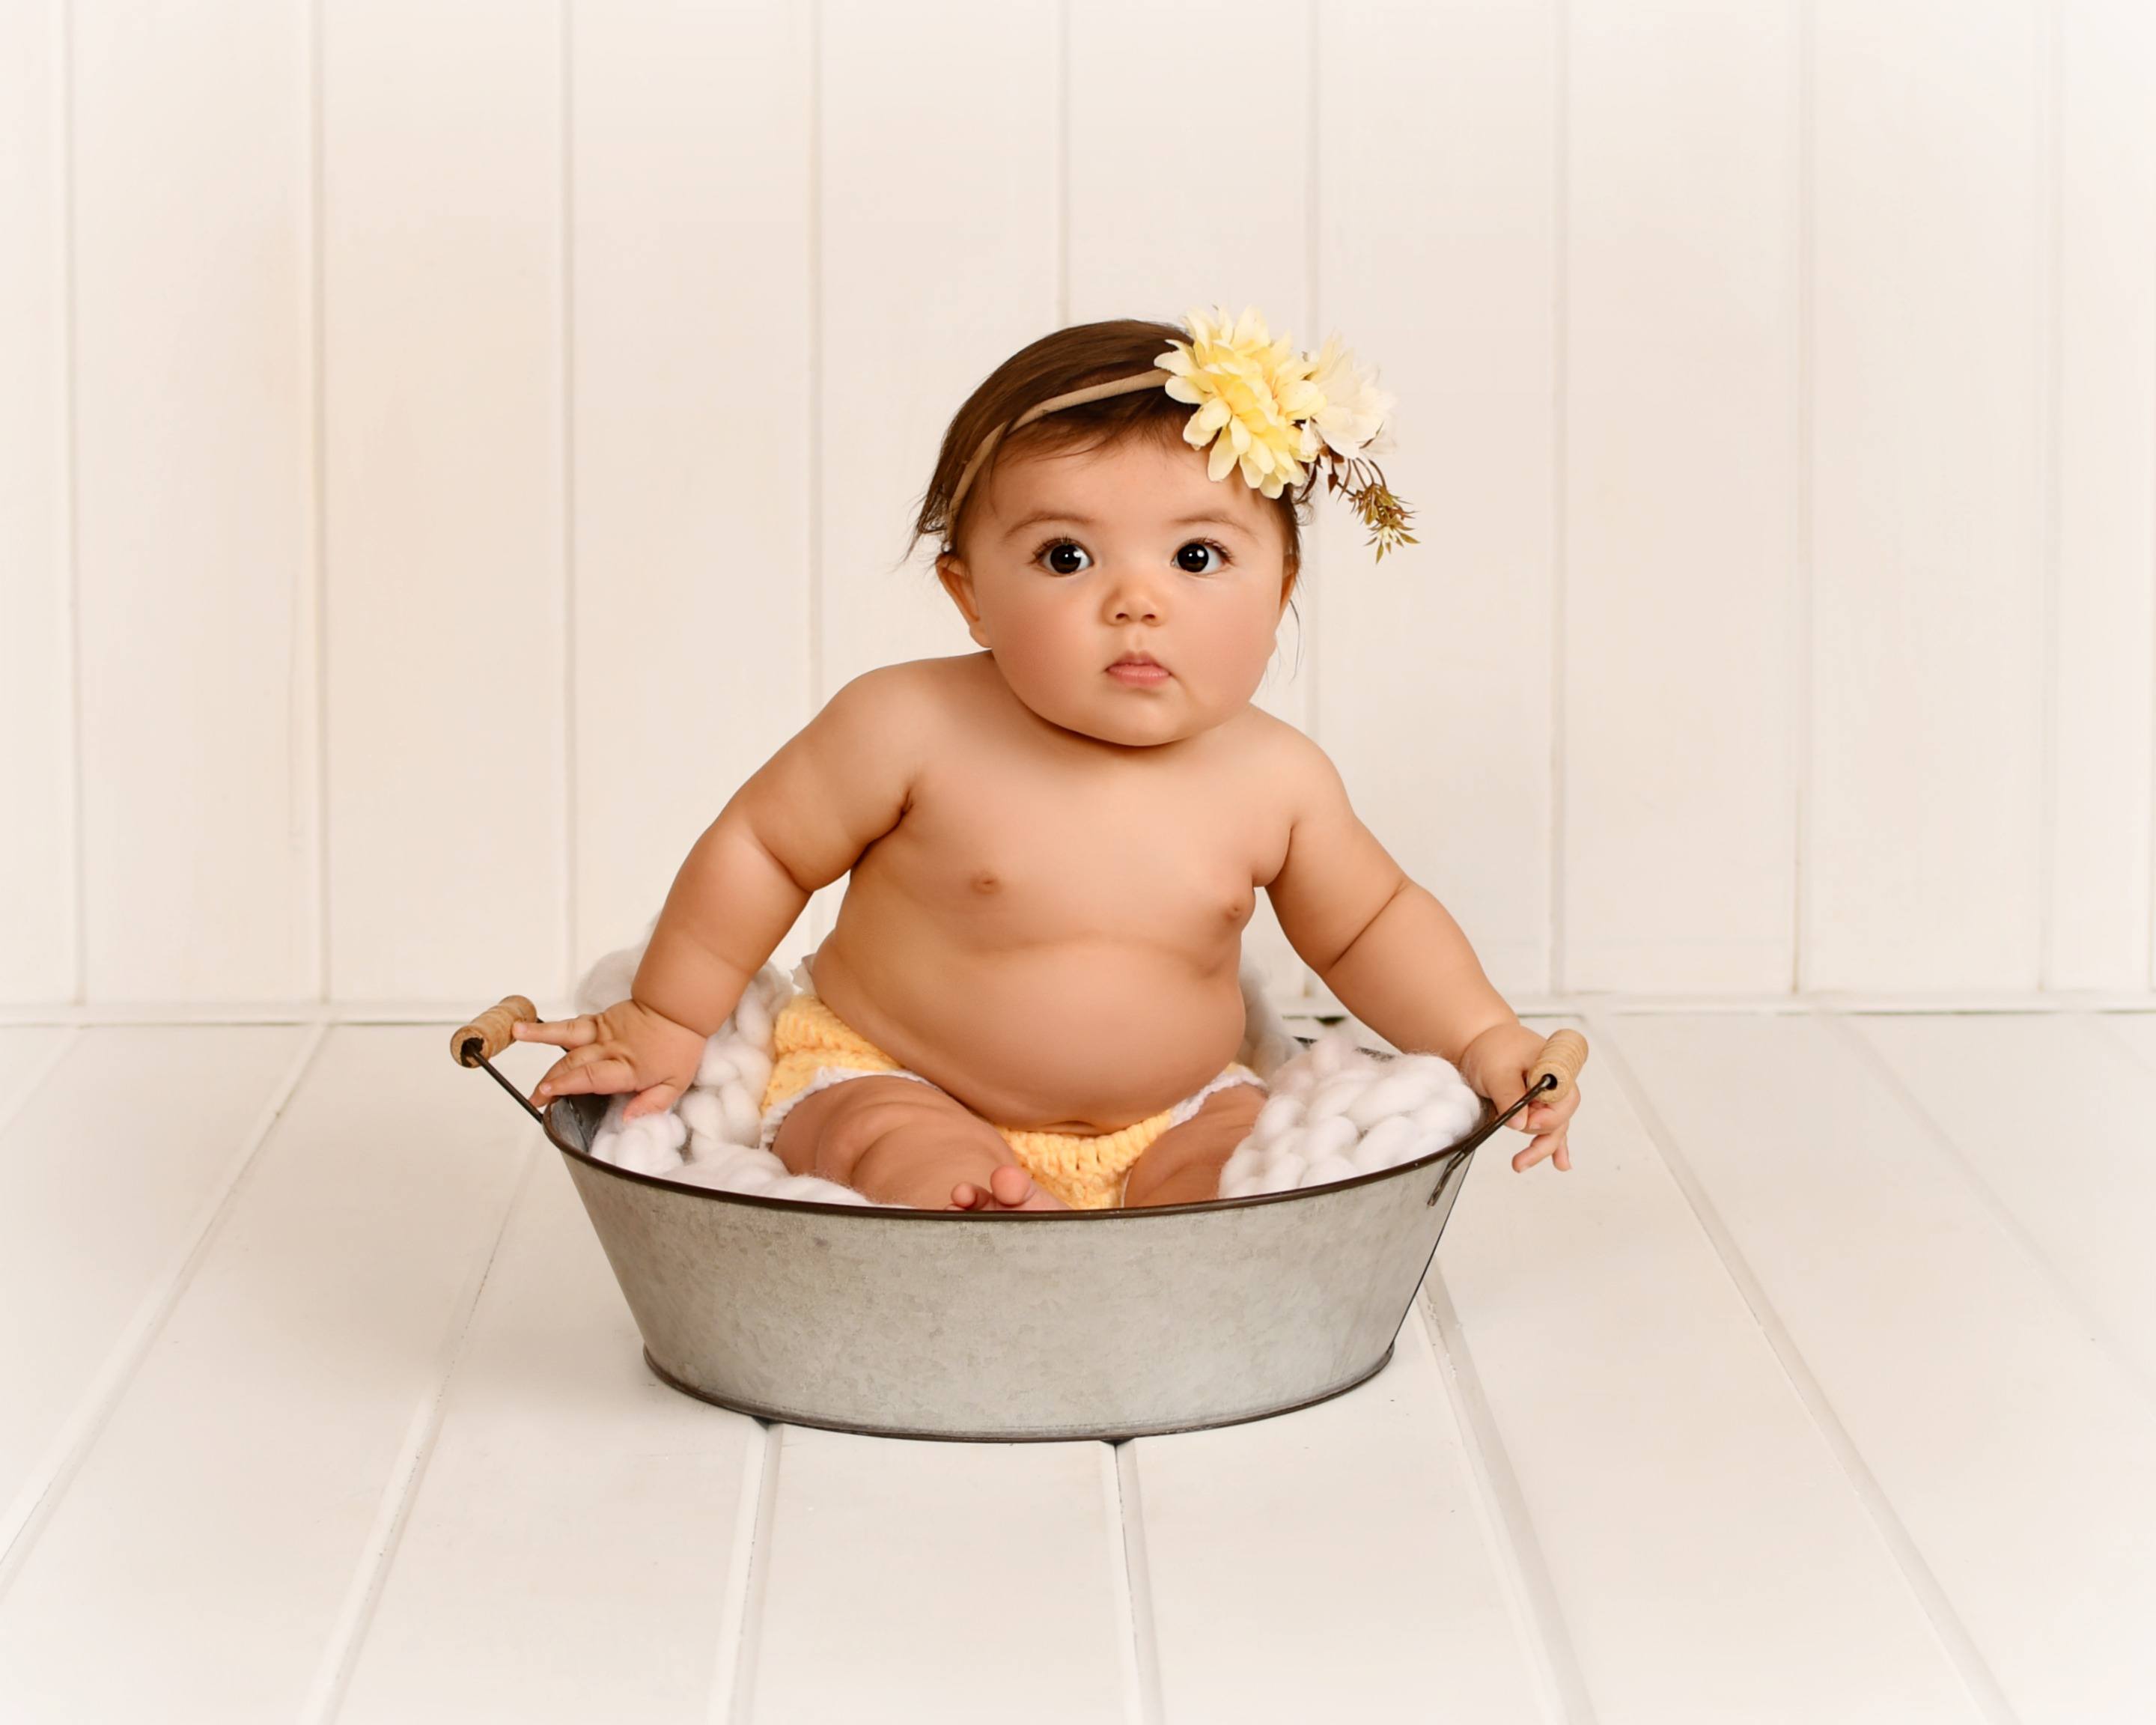 Infant Photographer 2 - Portfolio: Grow With Me